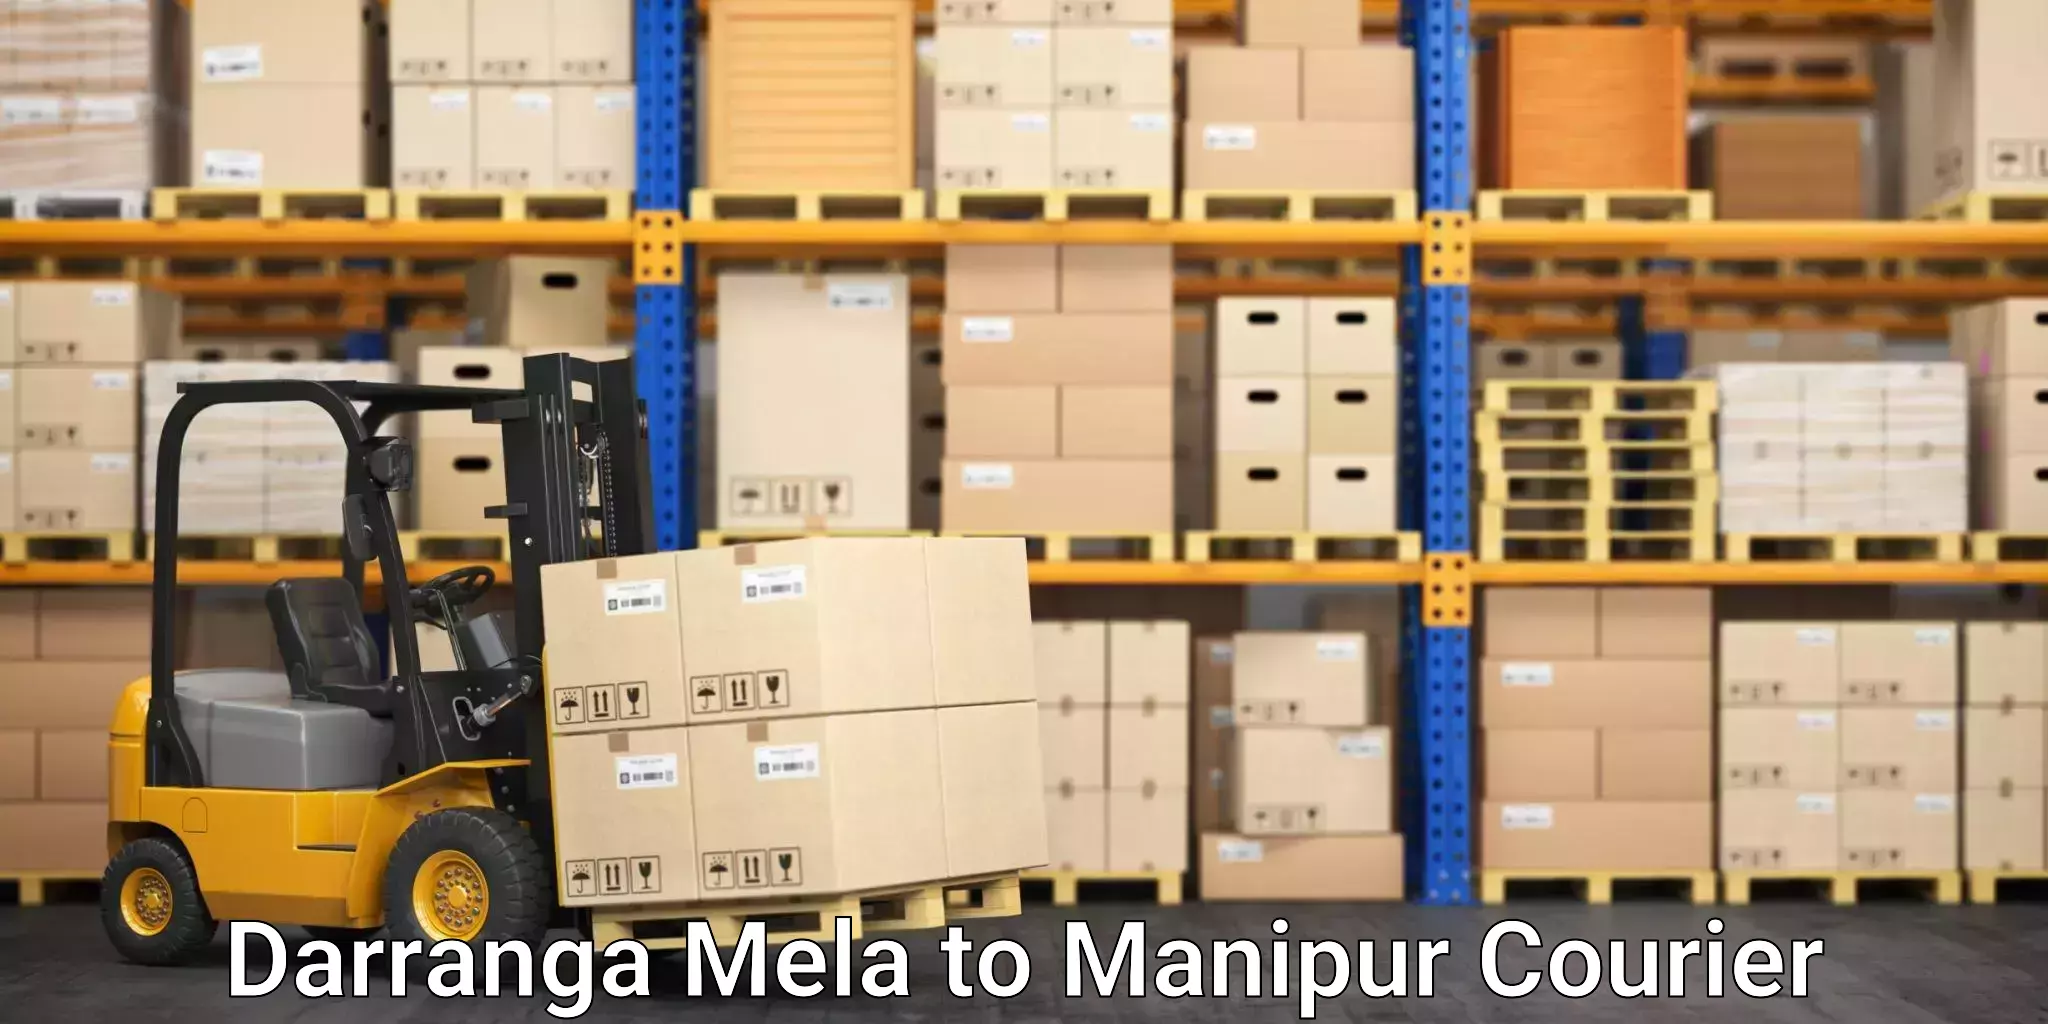 Corporate courier solutions Darranga Mela to Chandel